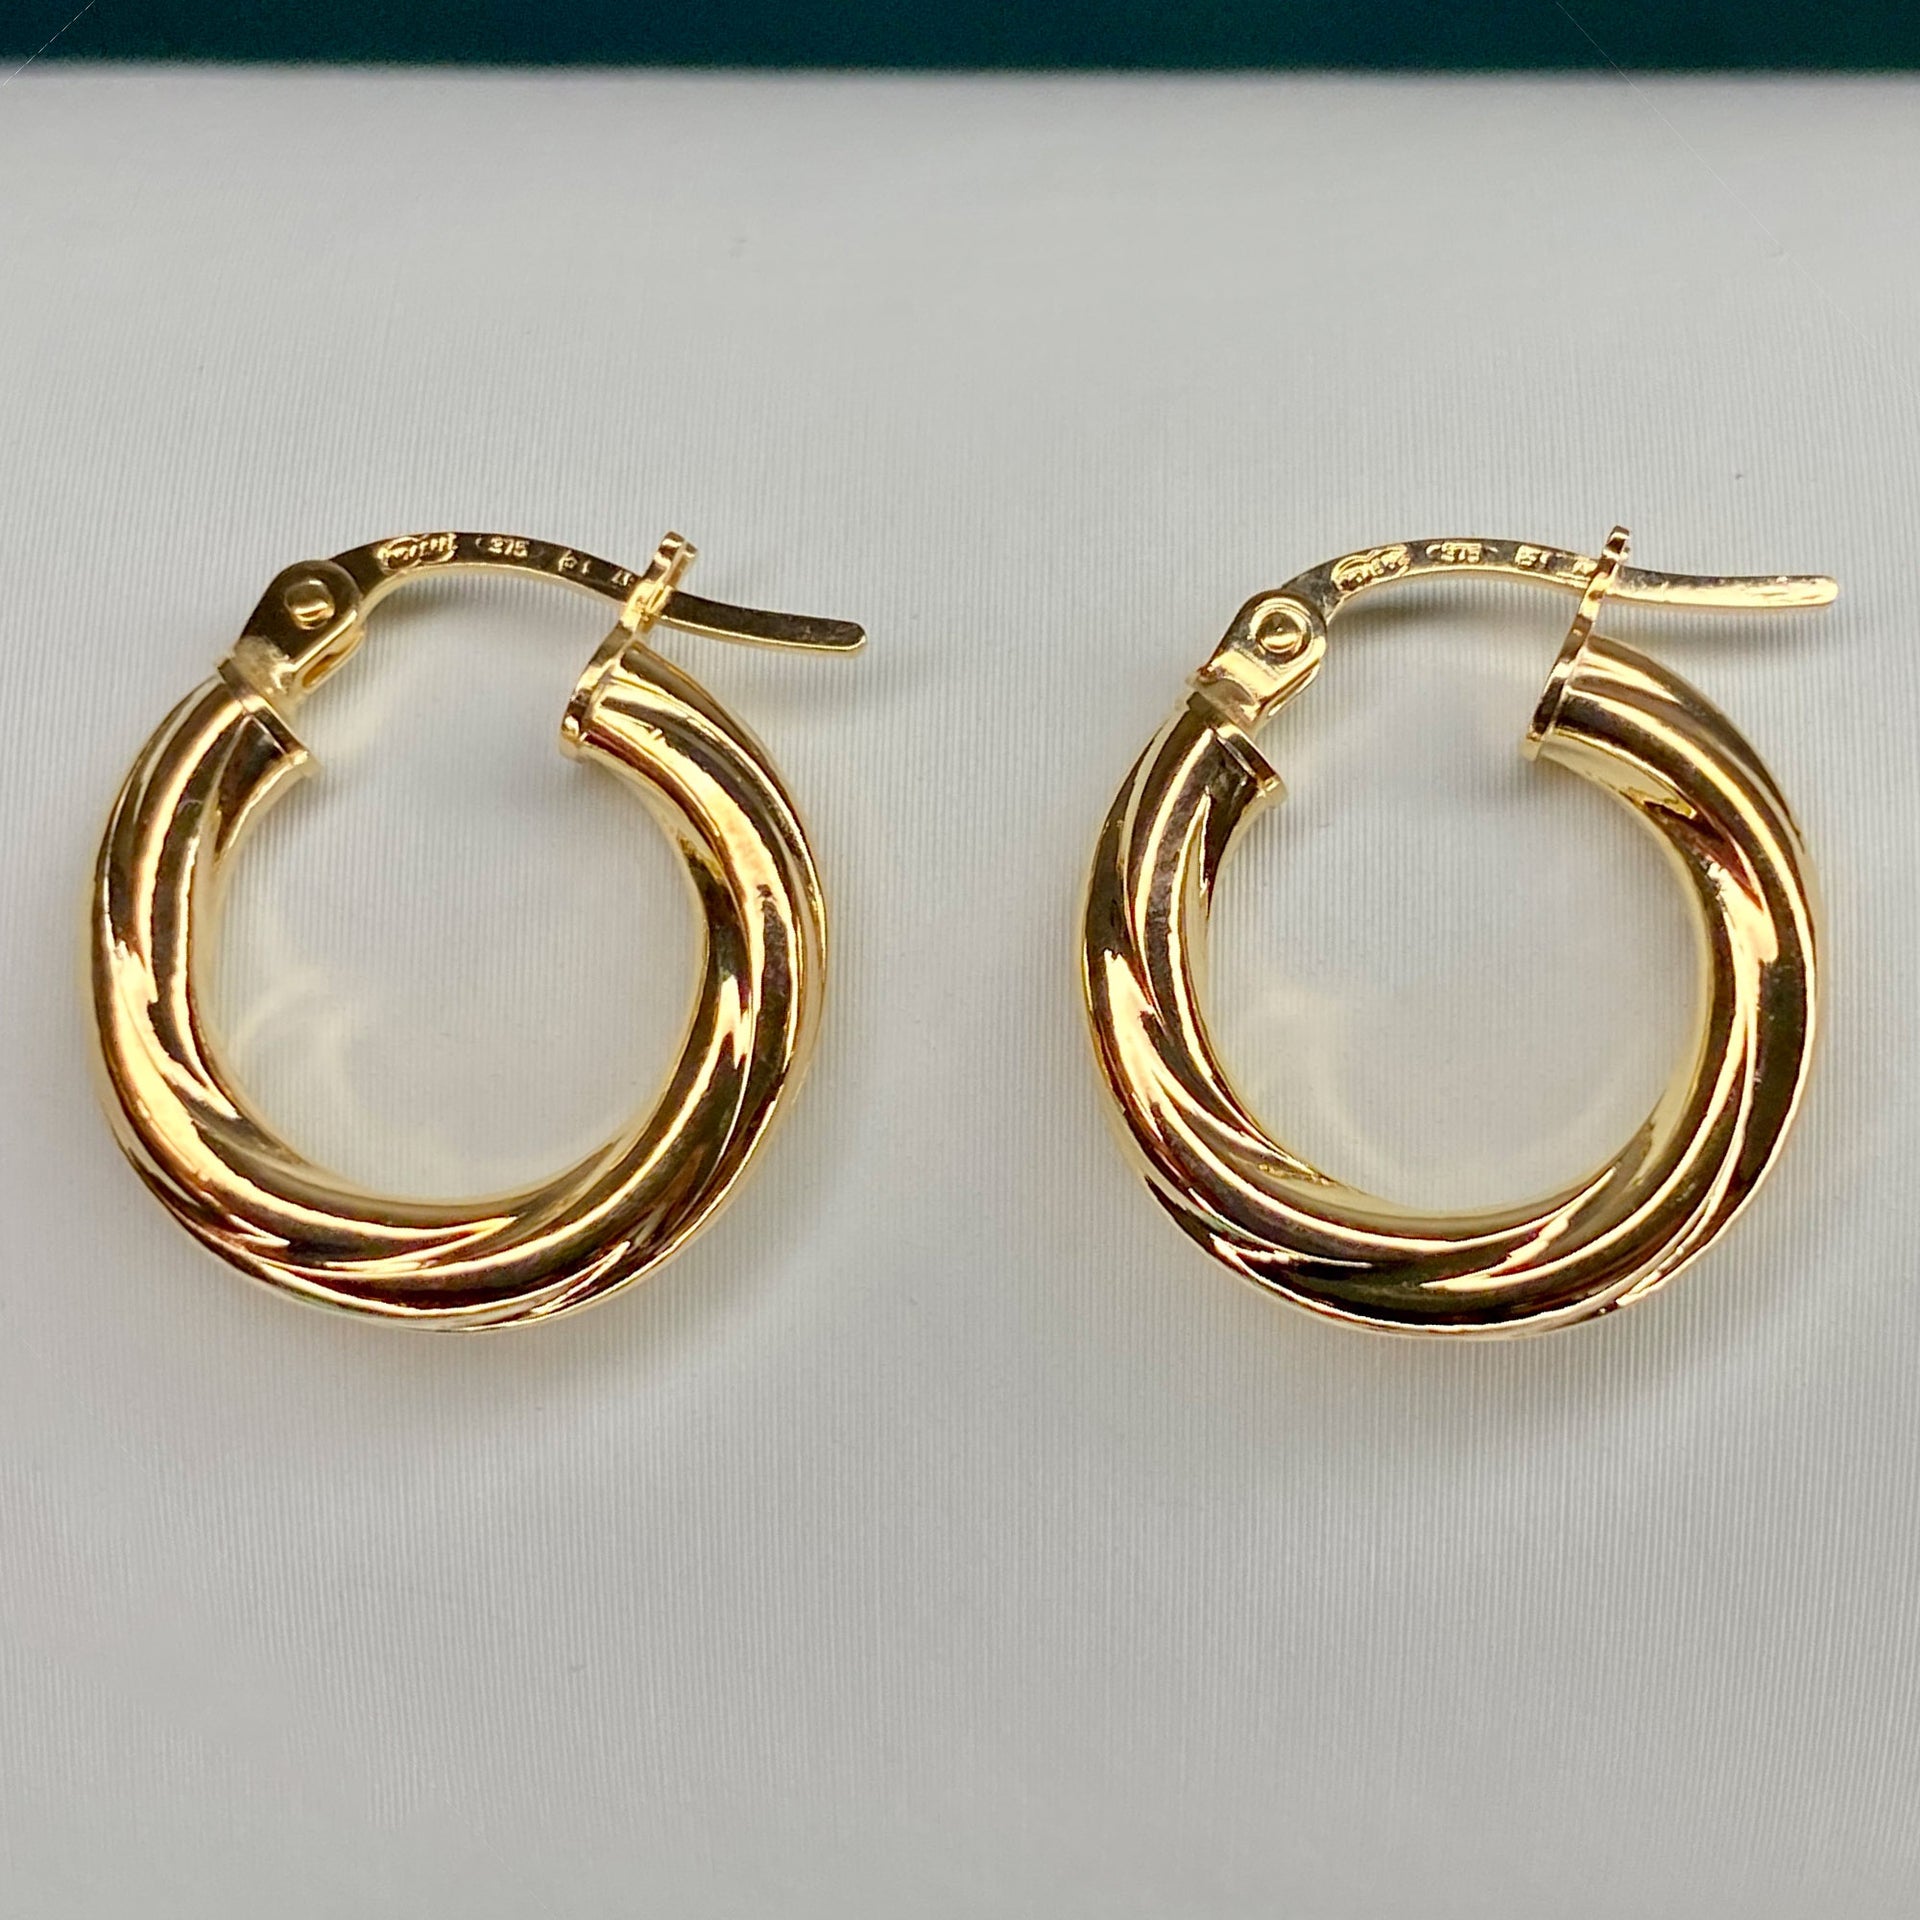 9ct solid Gold Twisted Hoop Earrings 15.6mm